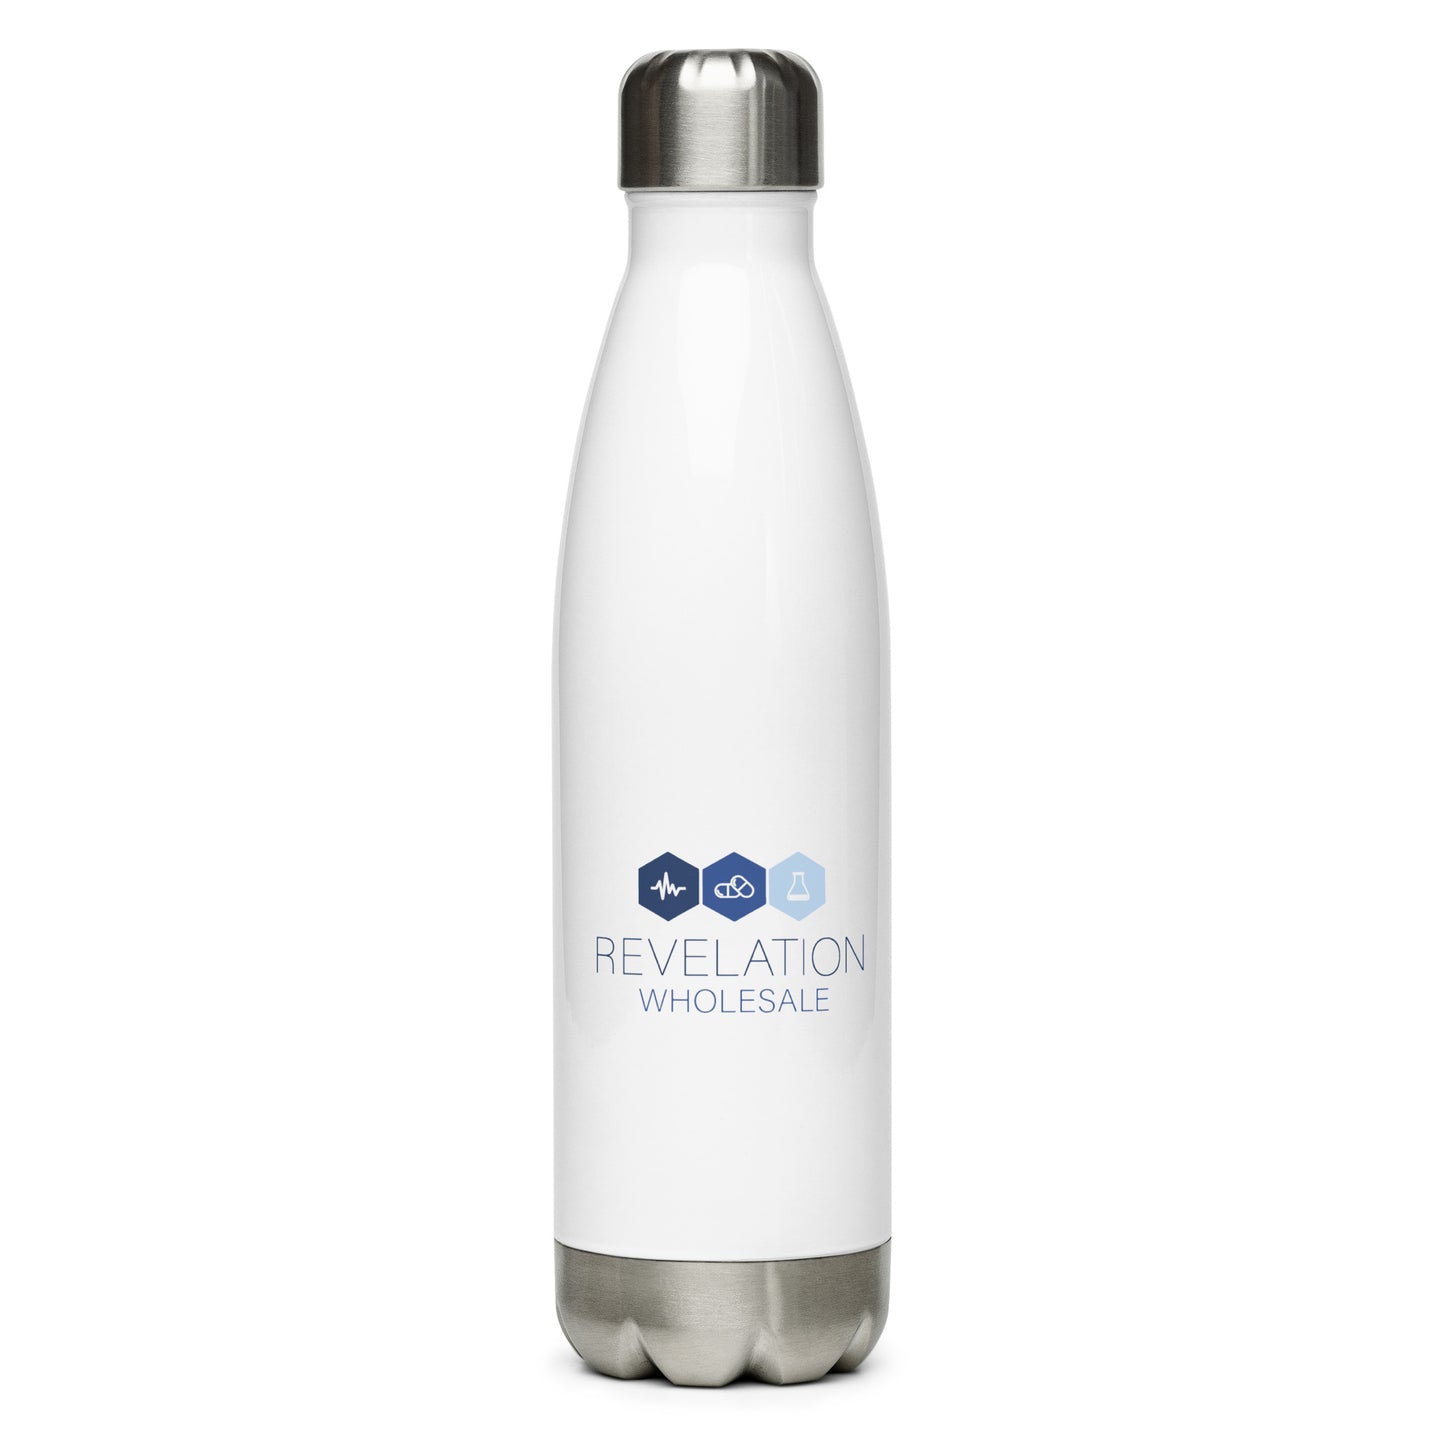 Stainless steel water bottle - Wholesale